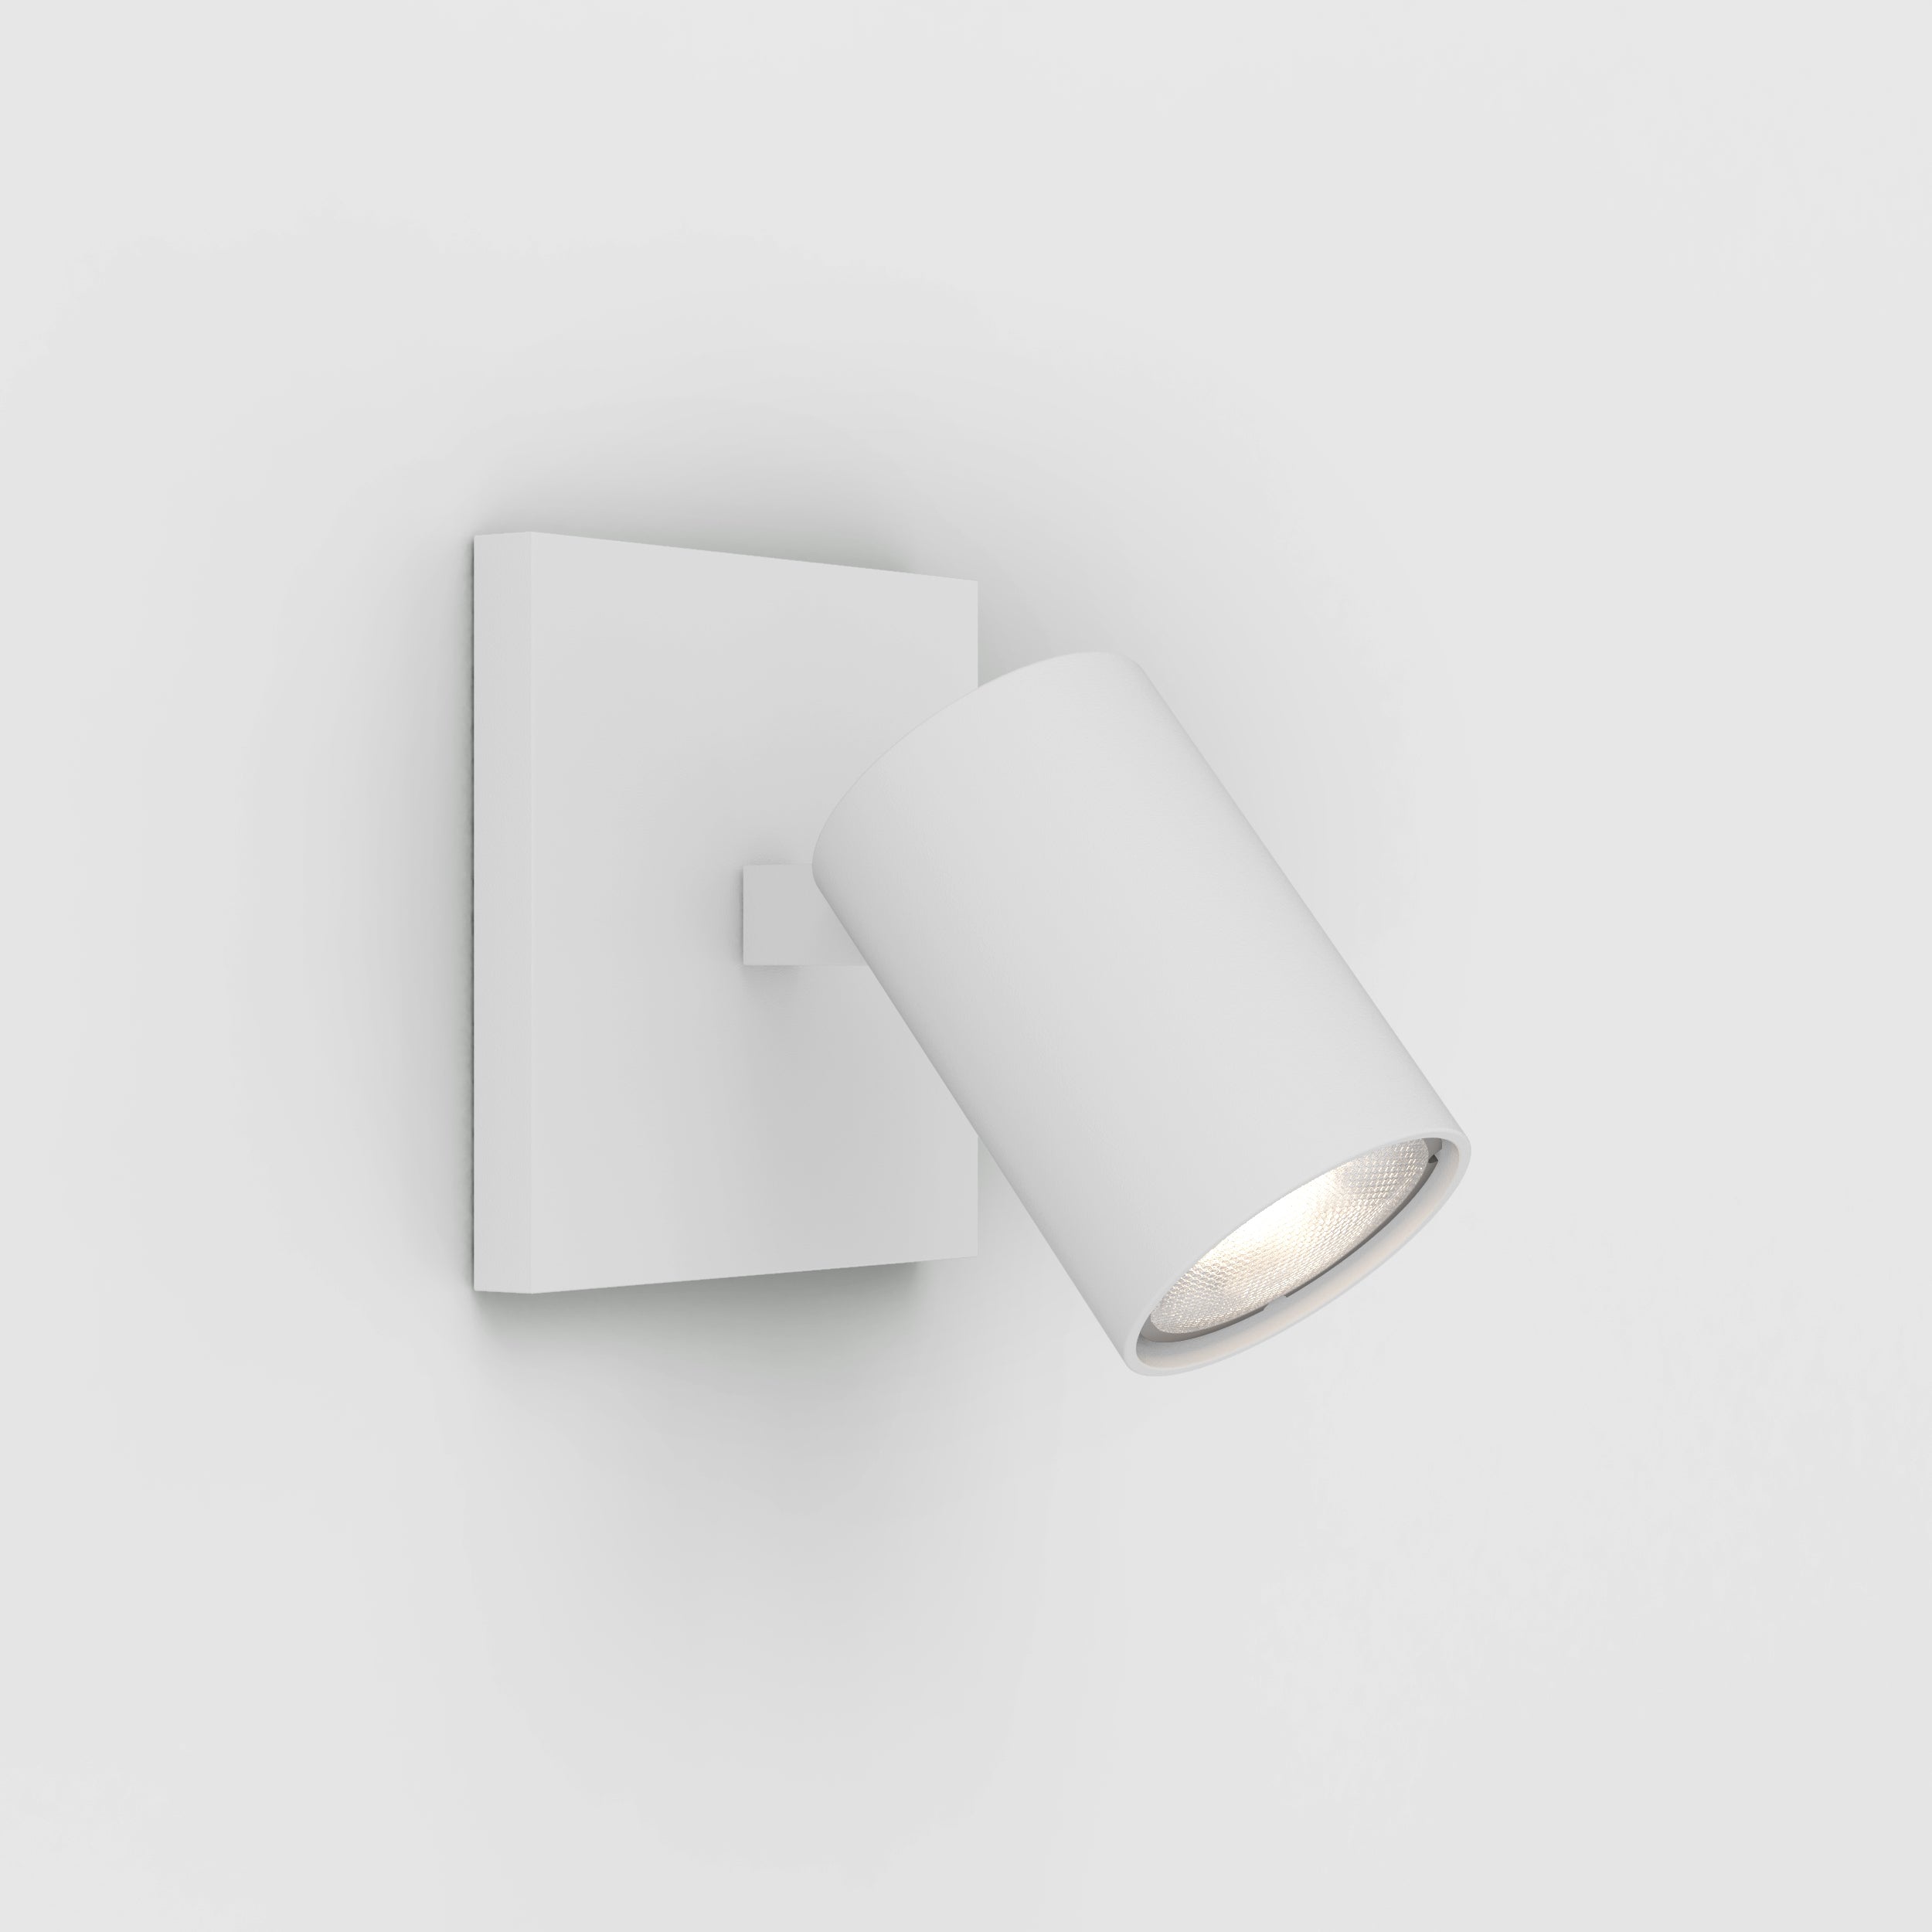 Astro Lighting Ascoli Single Wall Light Fixtures Astro Lighting 4.72x4.25x4.92 Textured White No, GU10